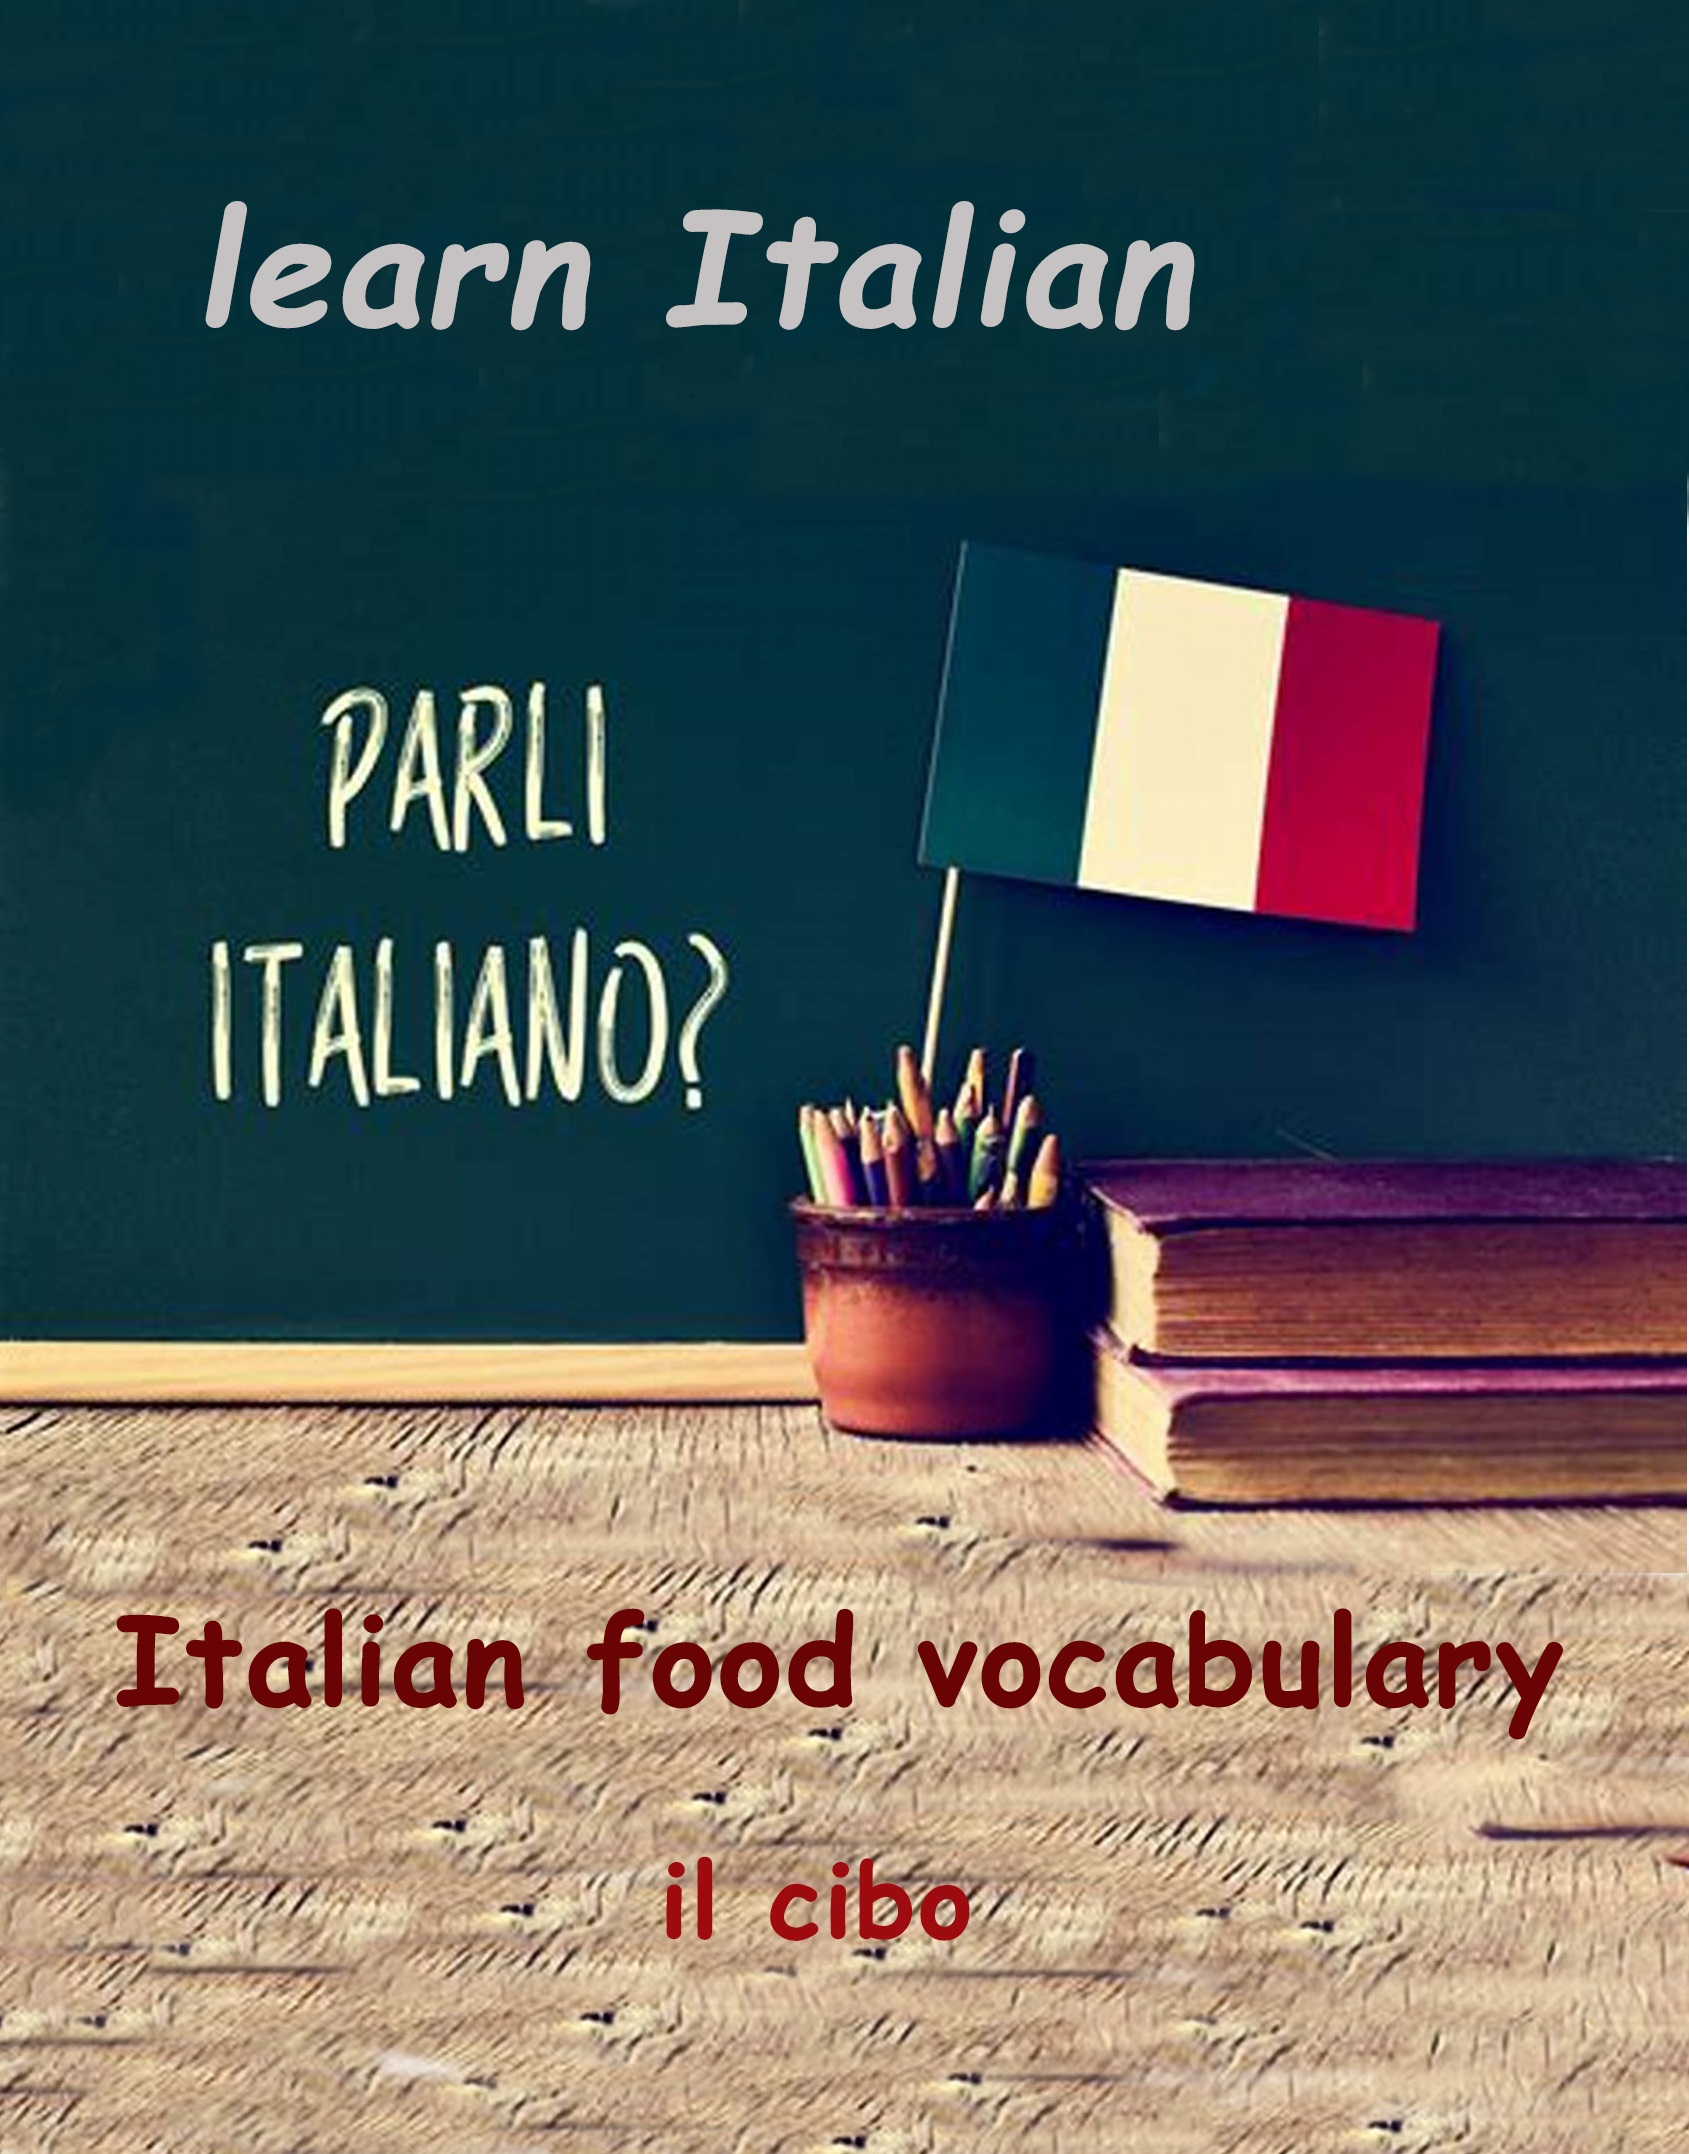 il cibo - Italian food vocabulary